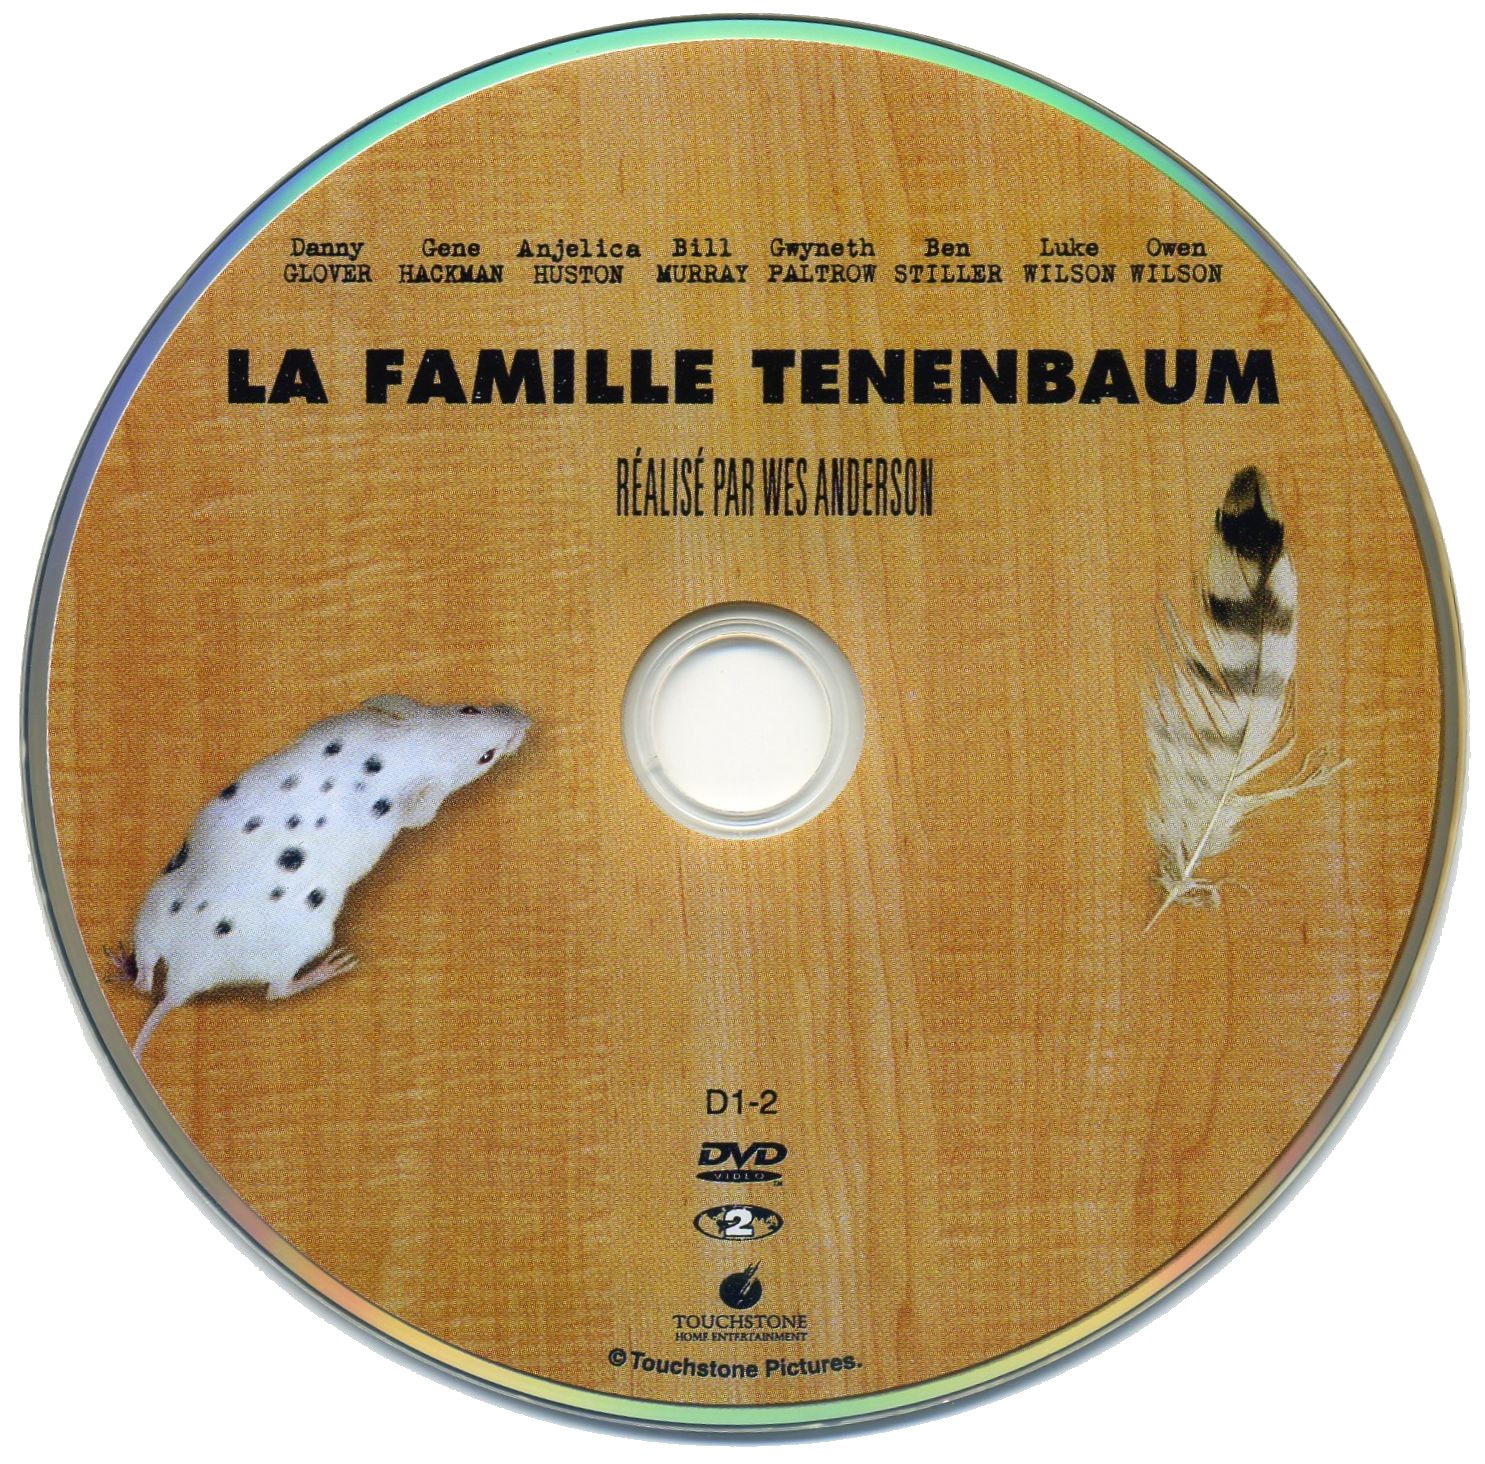 La famille Tenenbaum